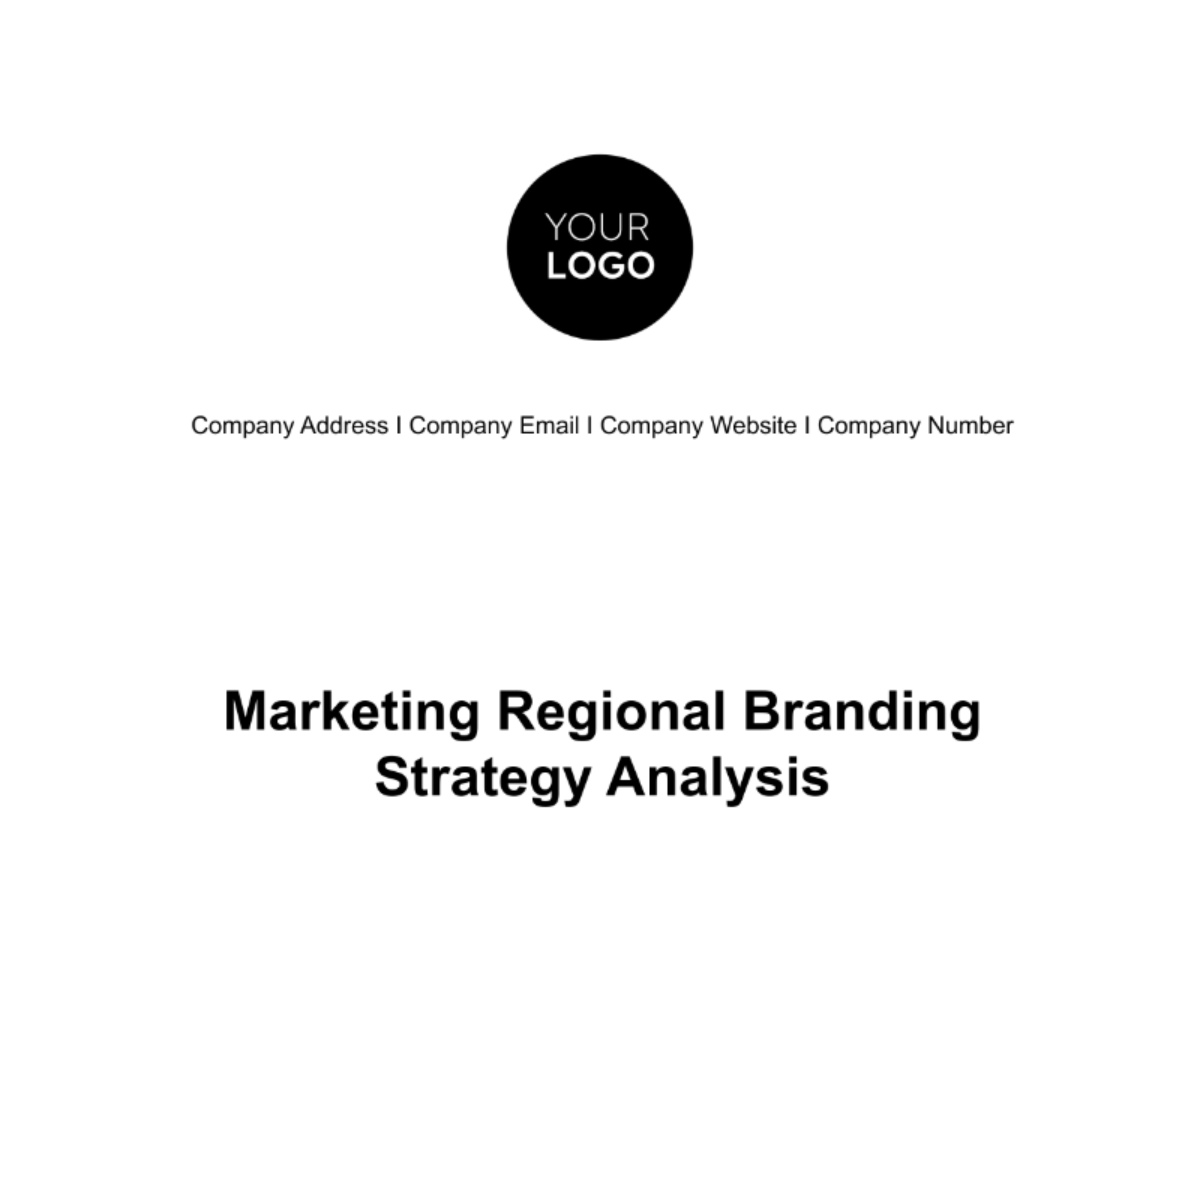 Marketing Regional Branding Strategy Analysis Template